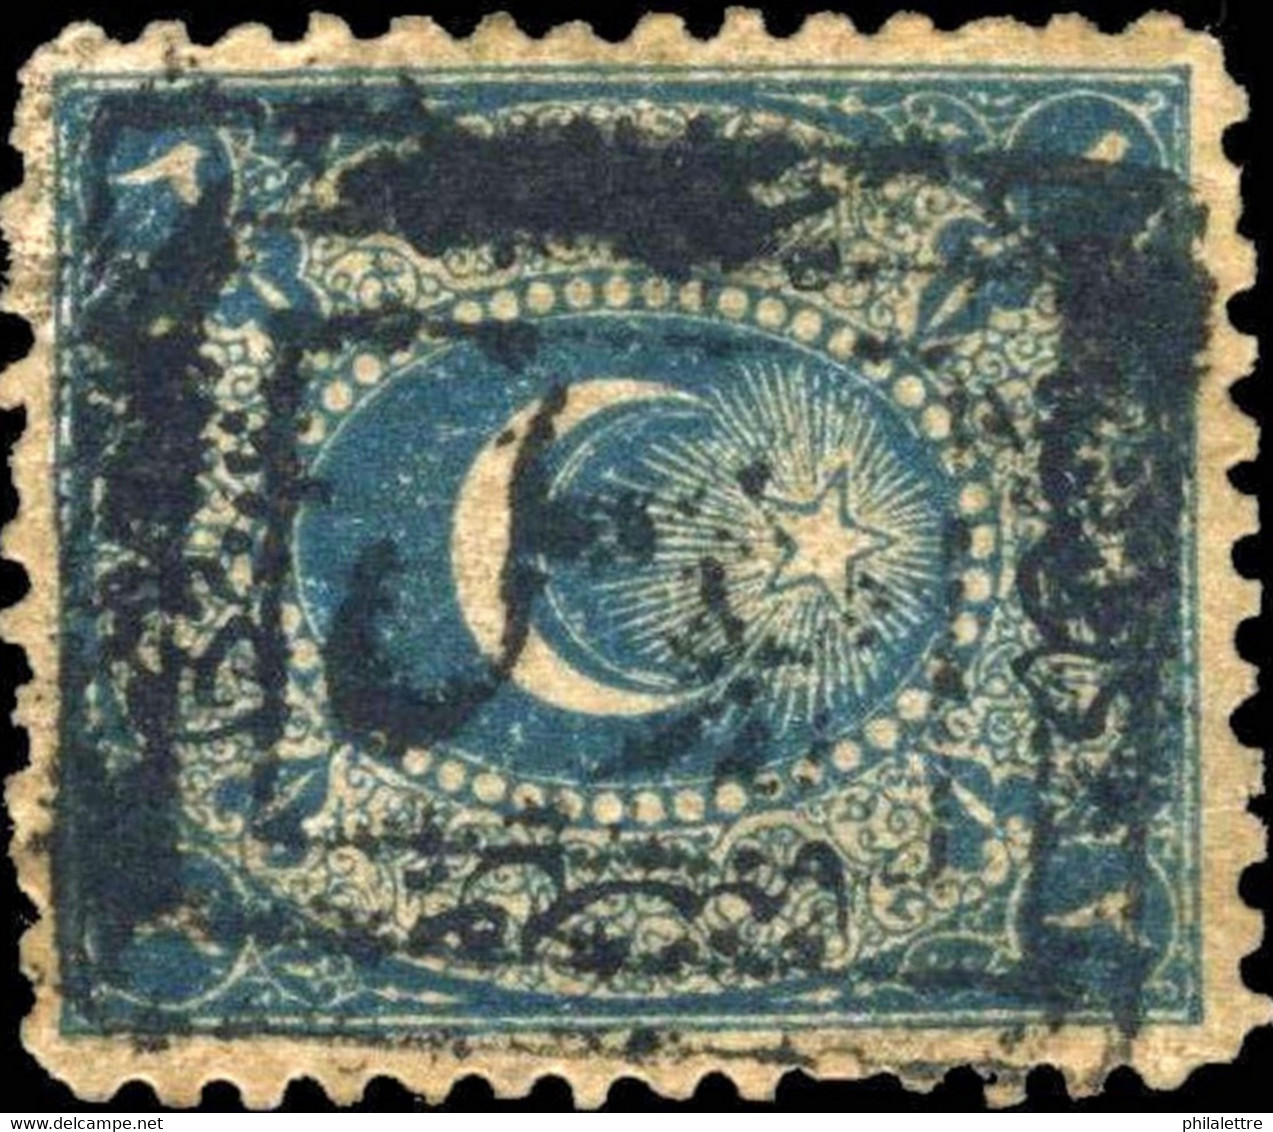 TURQUIE / TURKEY / TÜRKEI - MOSUL (IRAQ) POSTMARK /1867 DULOZ Mi.11 2Pi P.12 1/ 2 - Usati